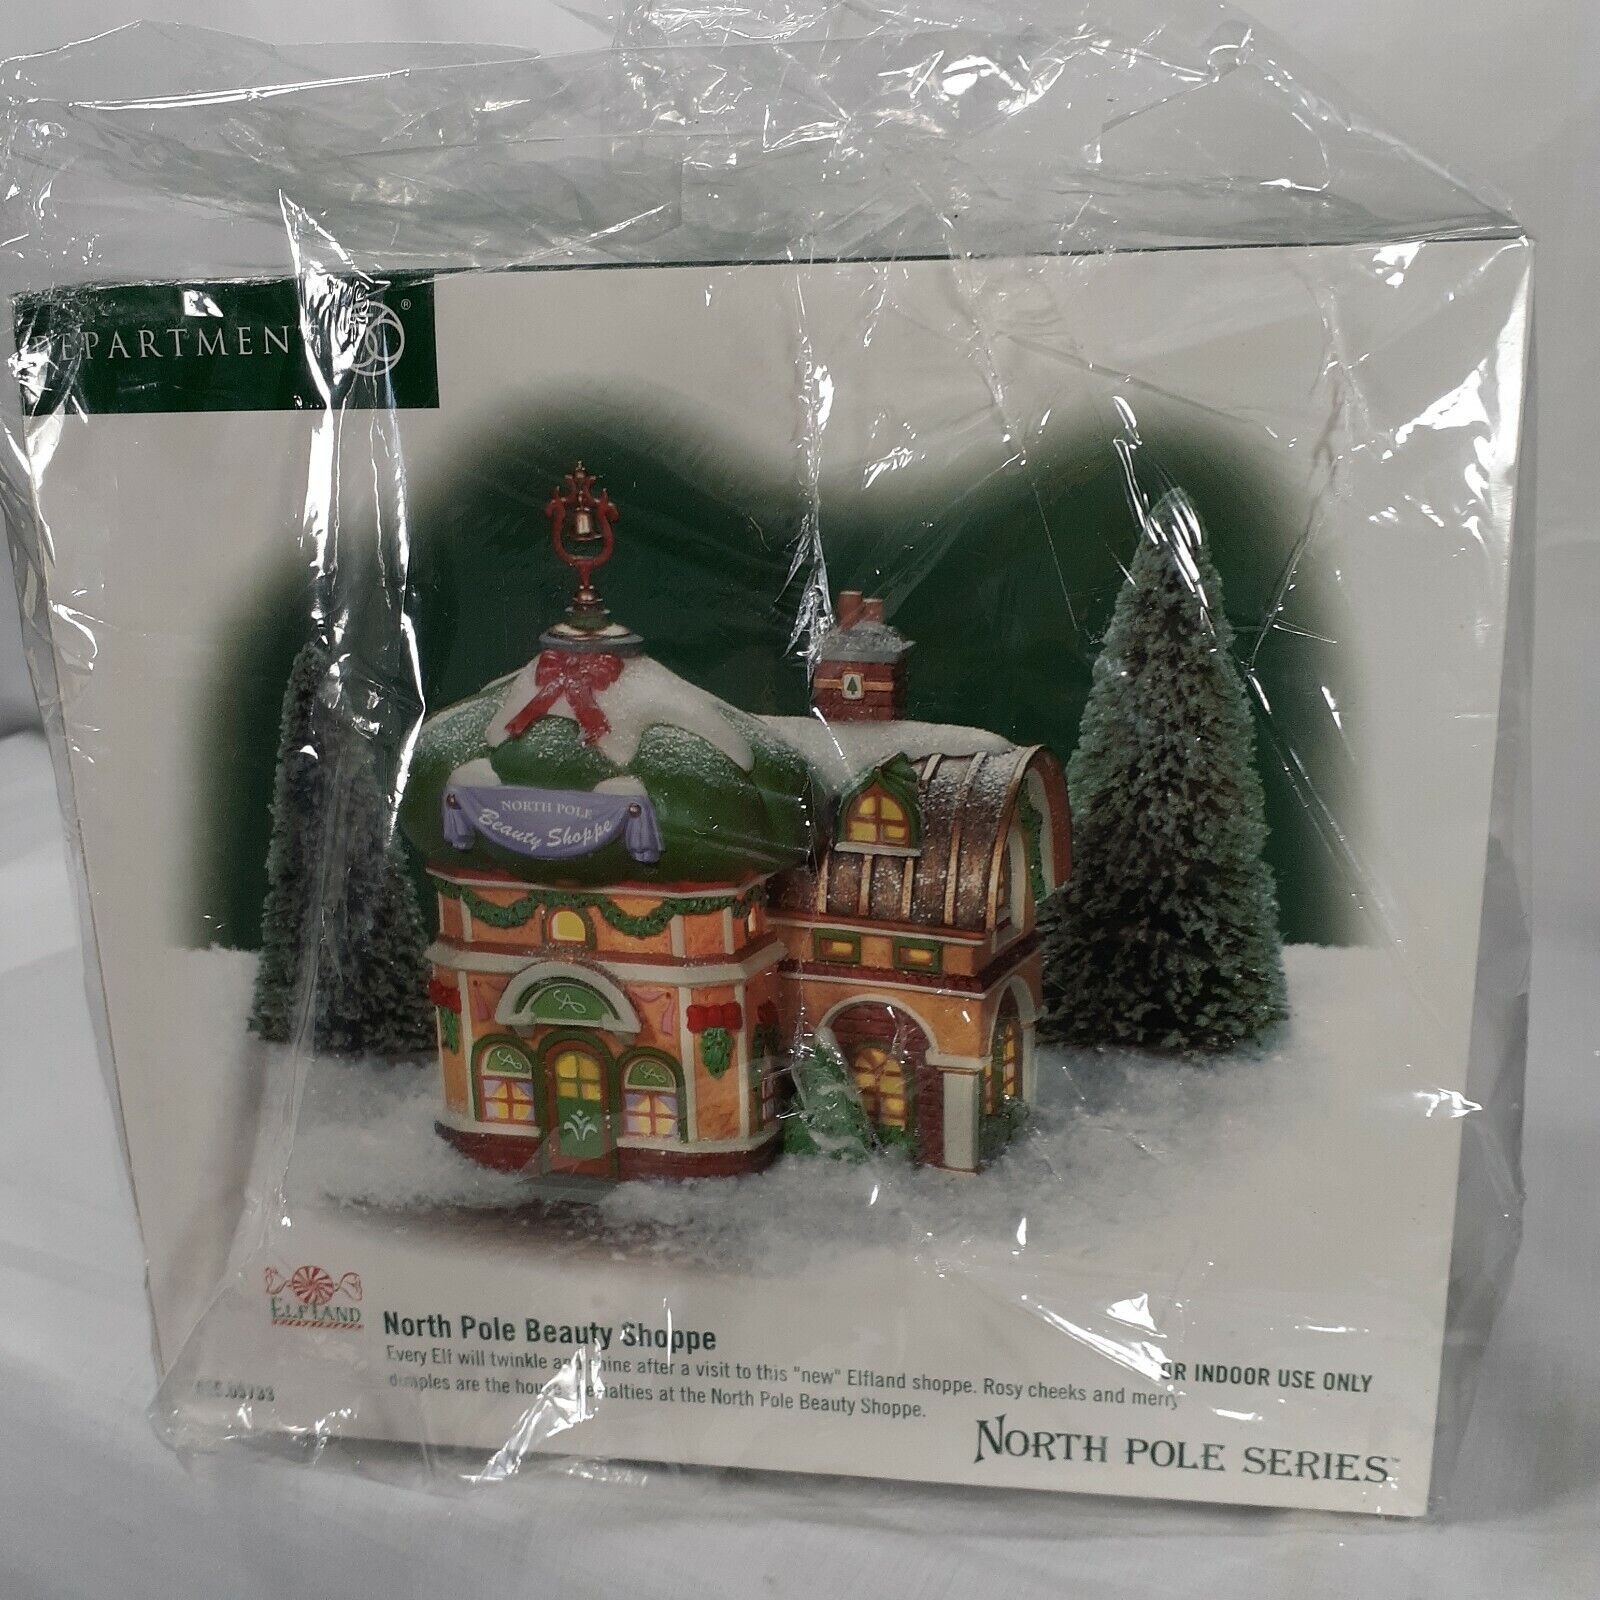 Dept 56 North Pole Beauty Shoppe North Pole Series #05733 Christmas Village 